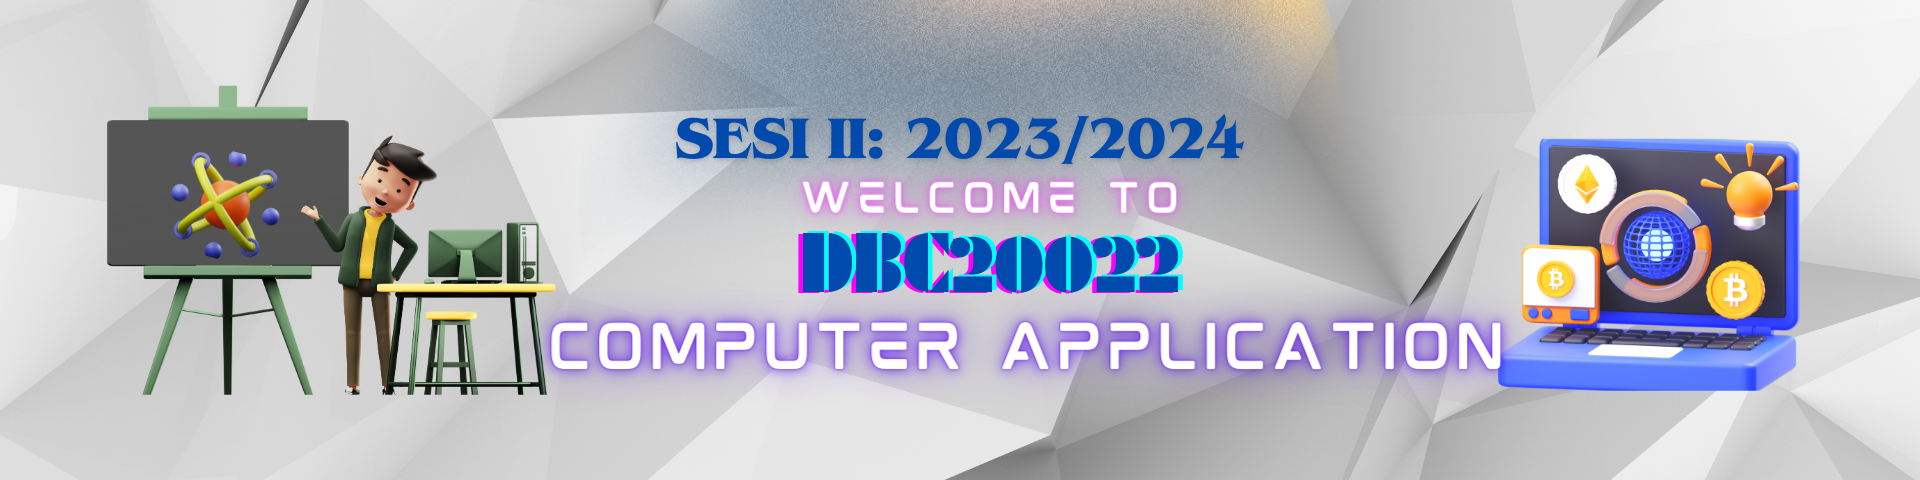 DBC20022 COMPUTER APPLICATION